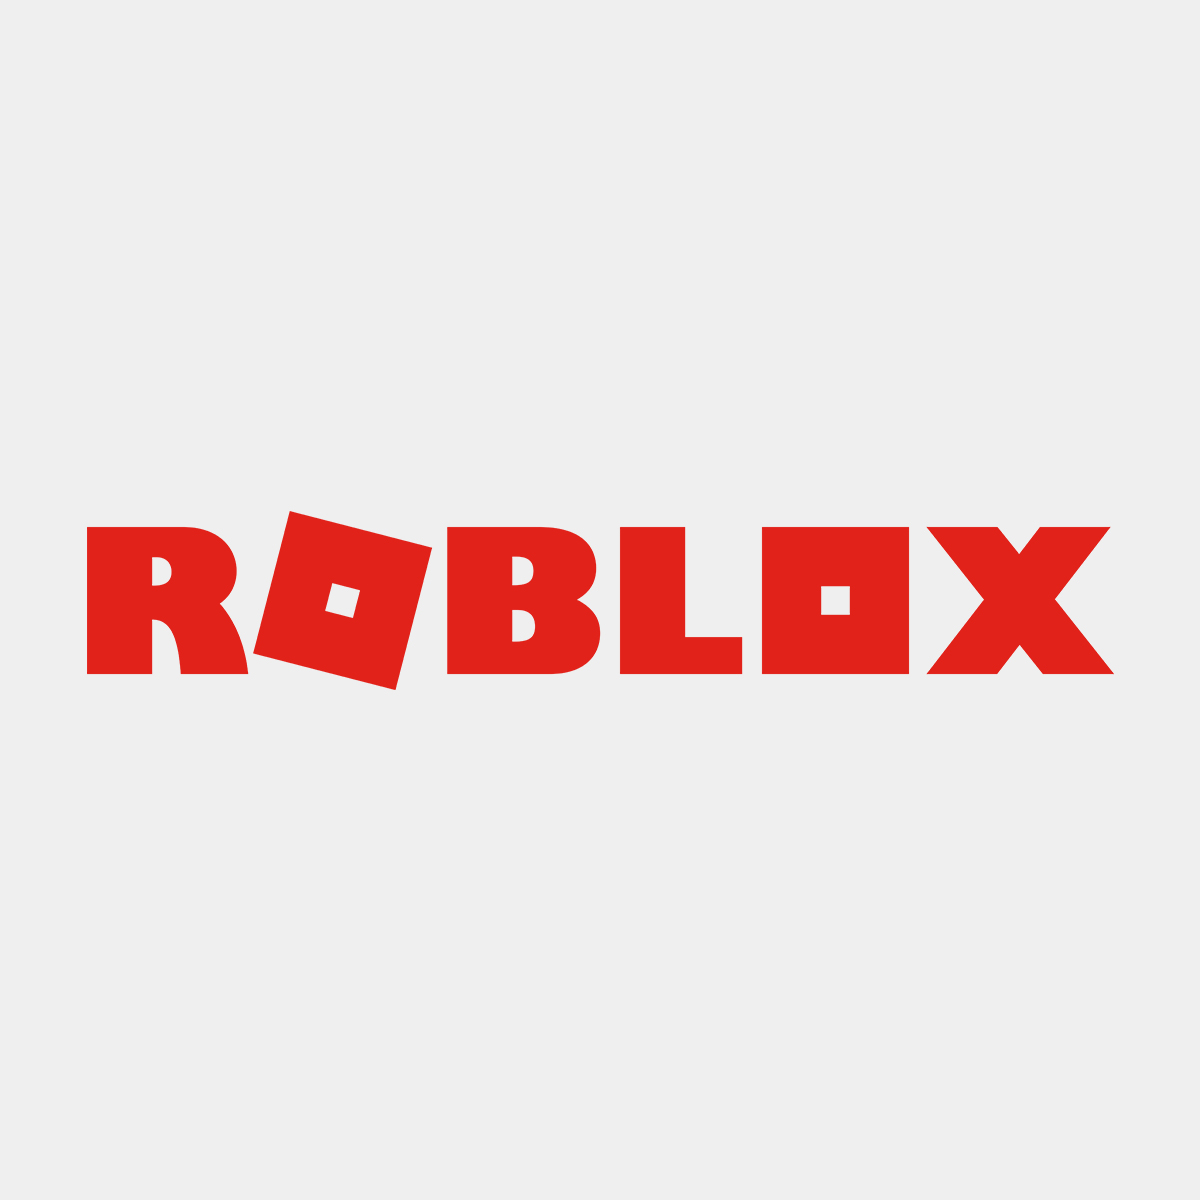 Old Roblox Logos - roblox logo t shirt womens t shirt products pinterest